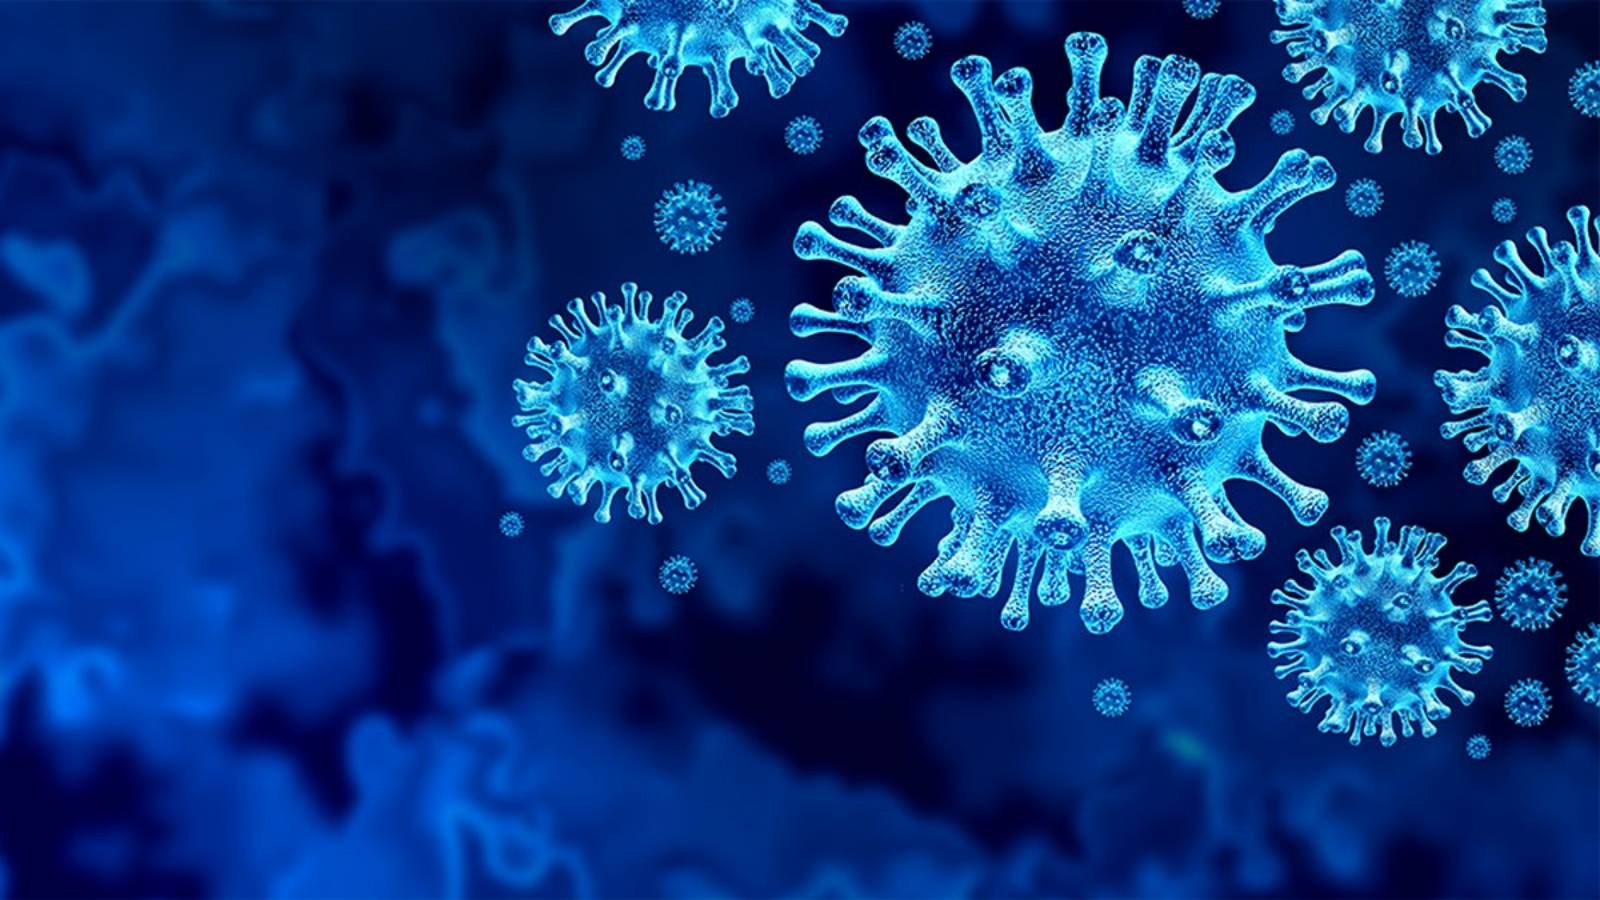 coronavirus romania noile cazuri vindecari 6 septembrie